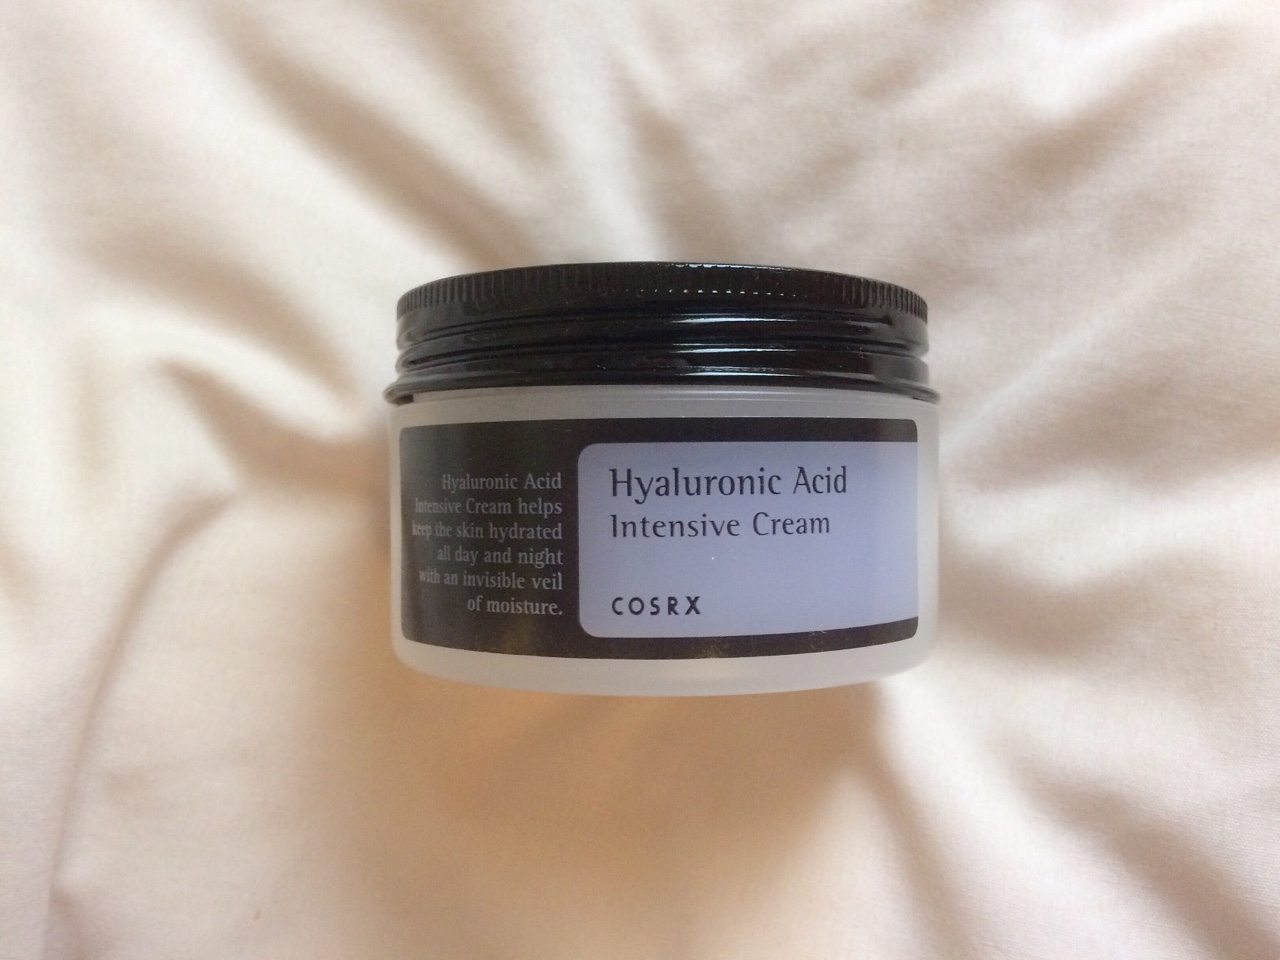 Cosrx Hyaluronic Acid Intensive Cream Image